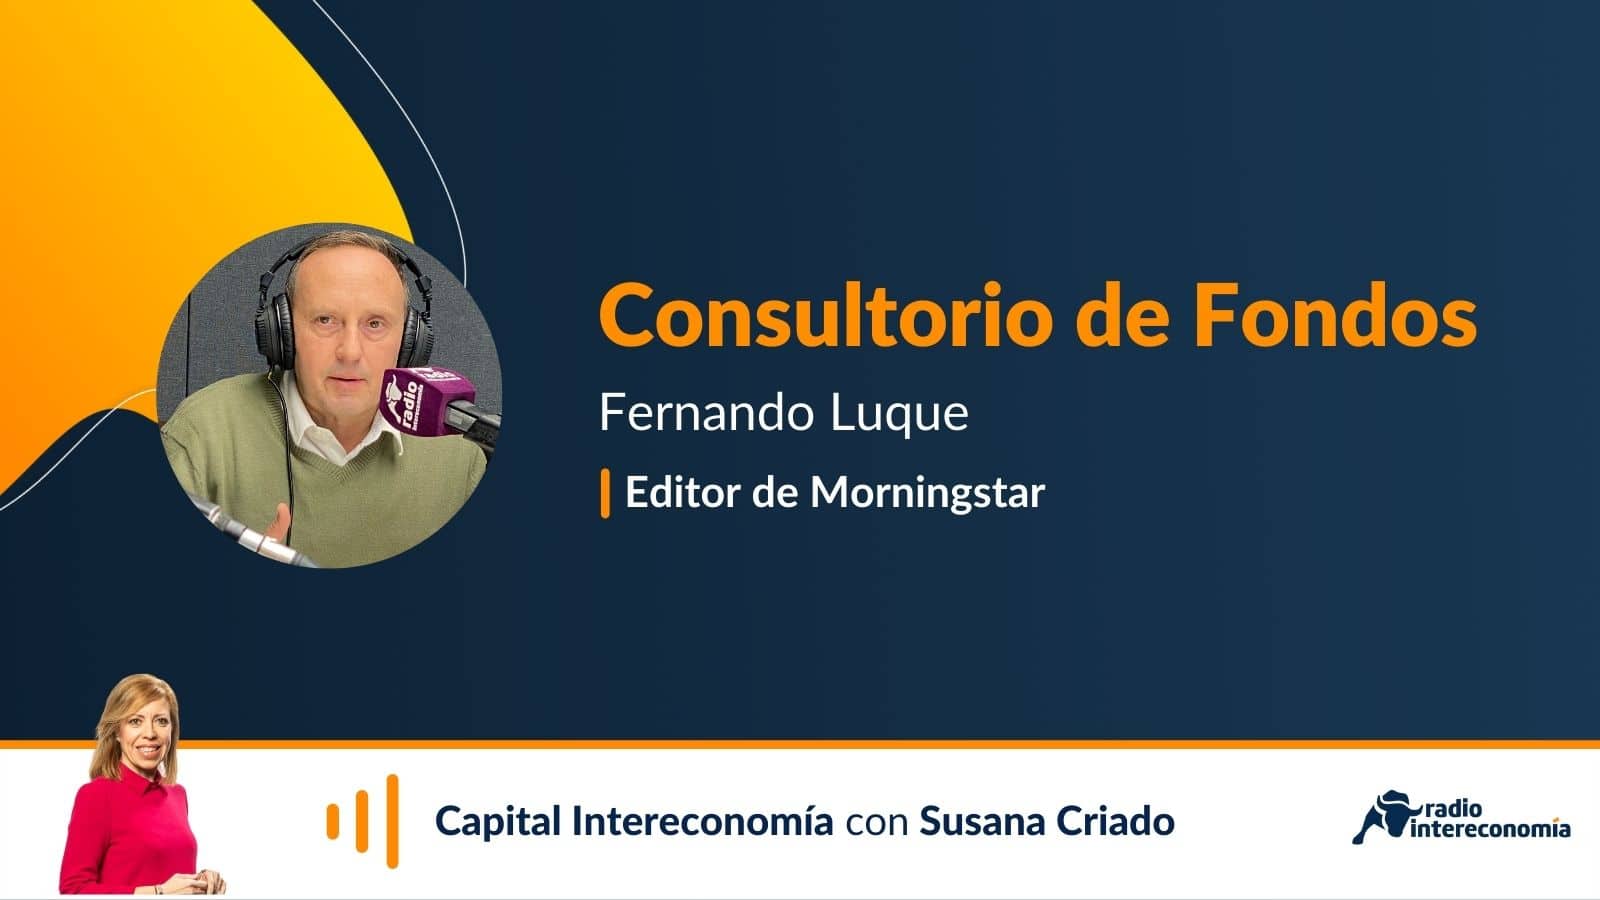 Consultorio de fondos com Fernando Luque (Morningstar)